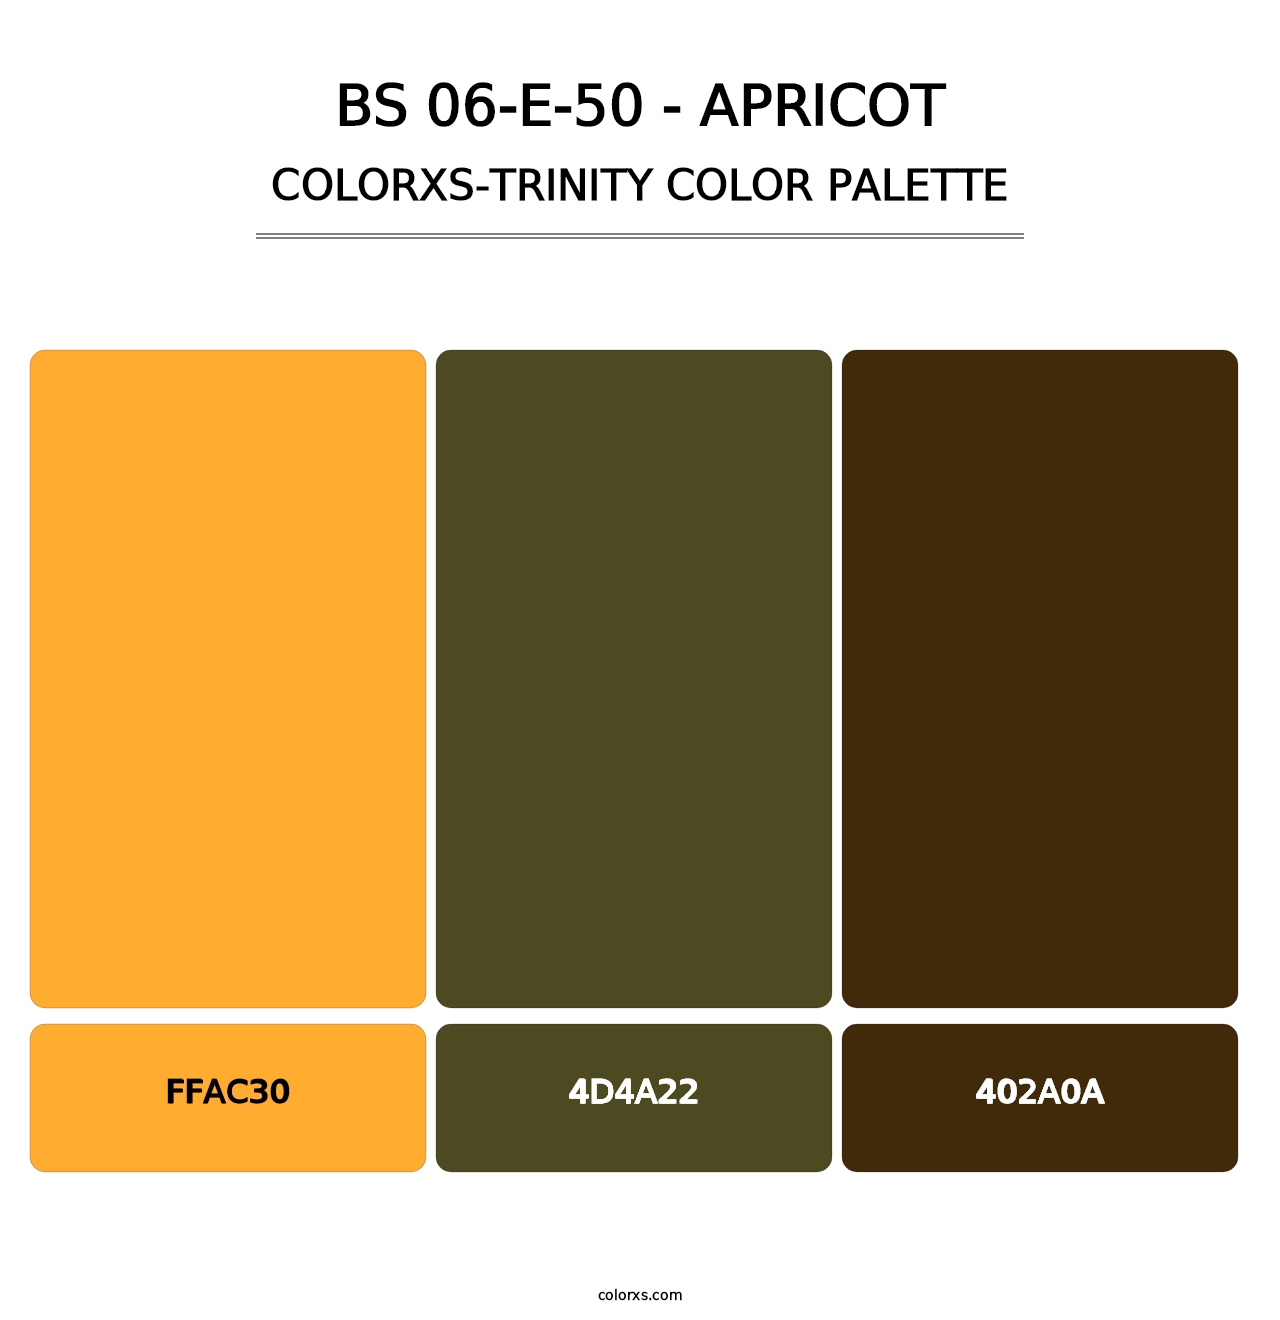 BS 06-E-50 - Apricot - Colorxs Trinity Palette